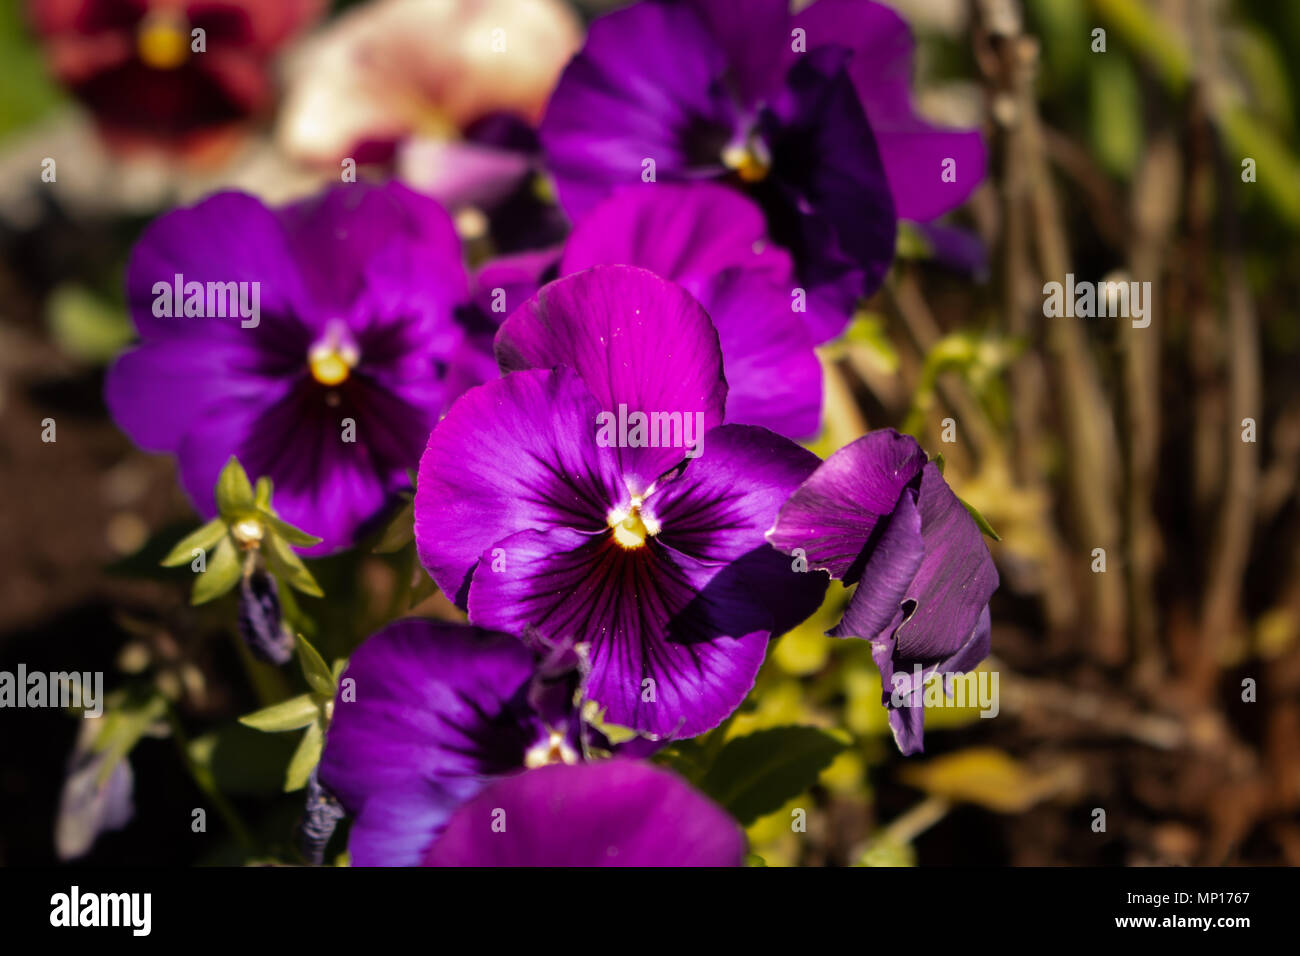 Vibrant purple or mauve pansies Stock Photo